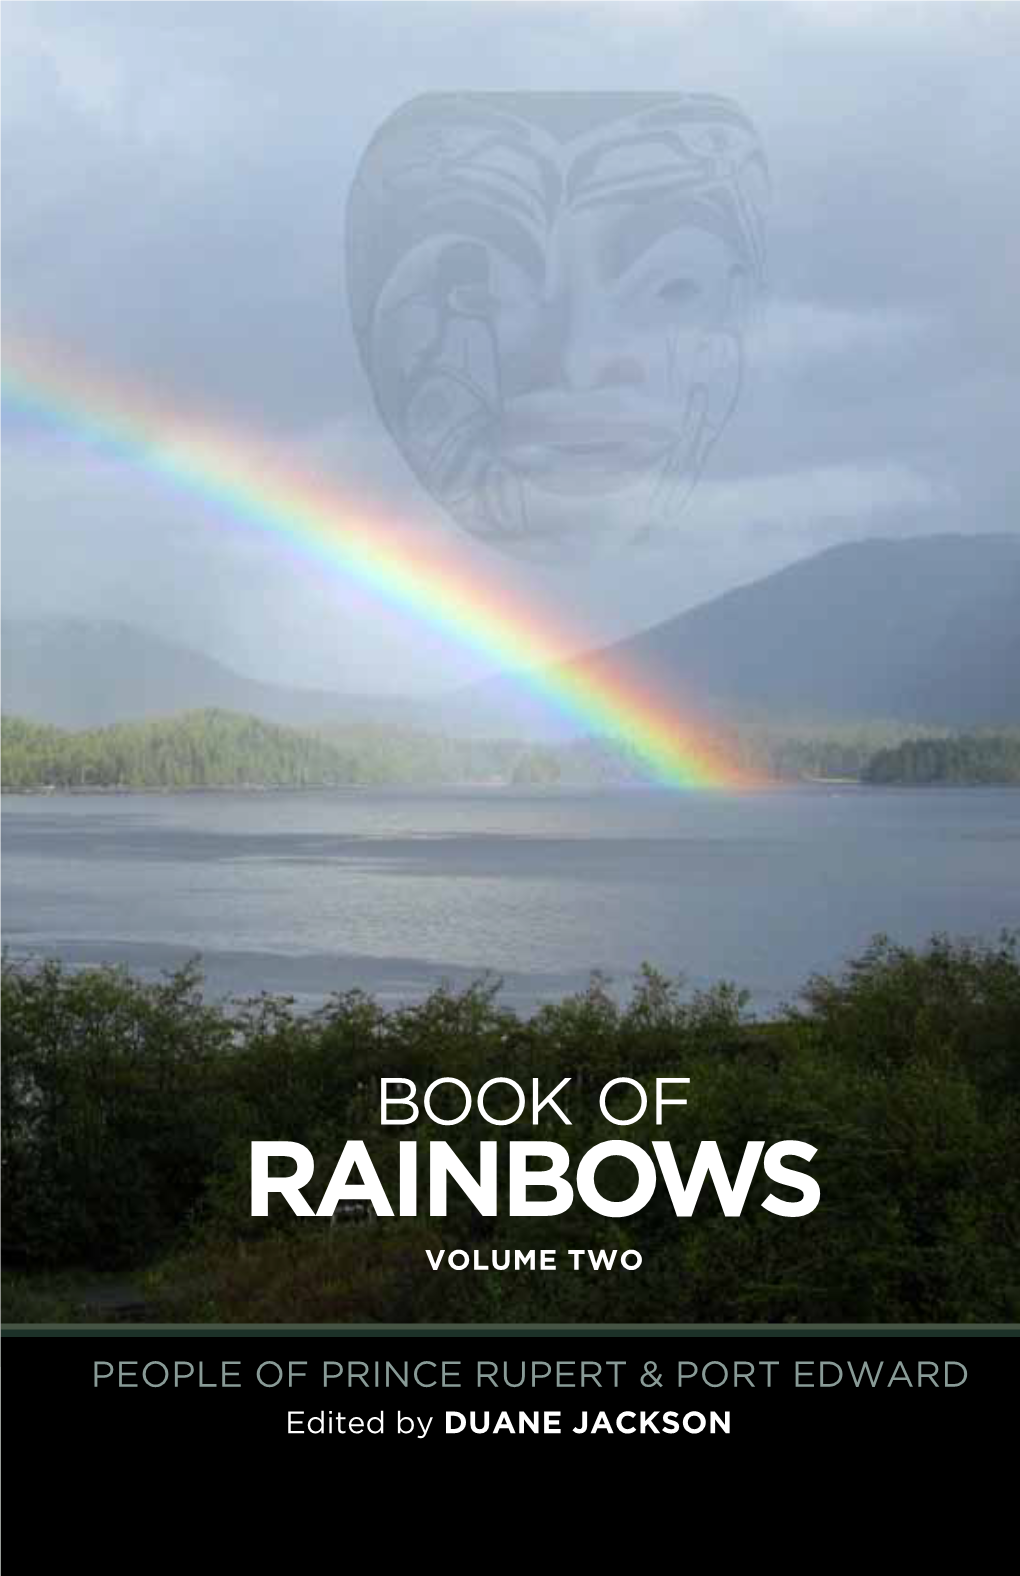 Rainbows Volume Two